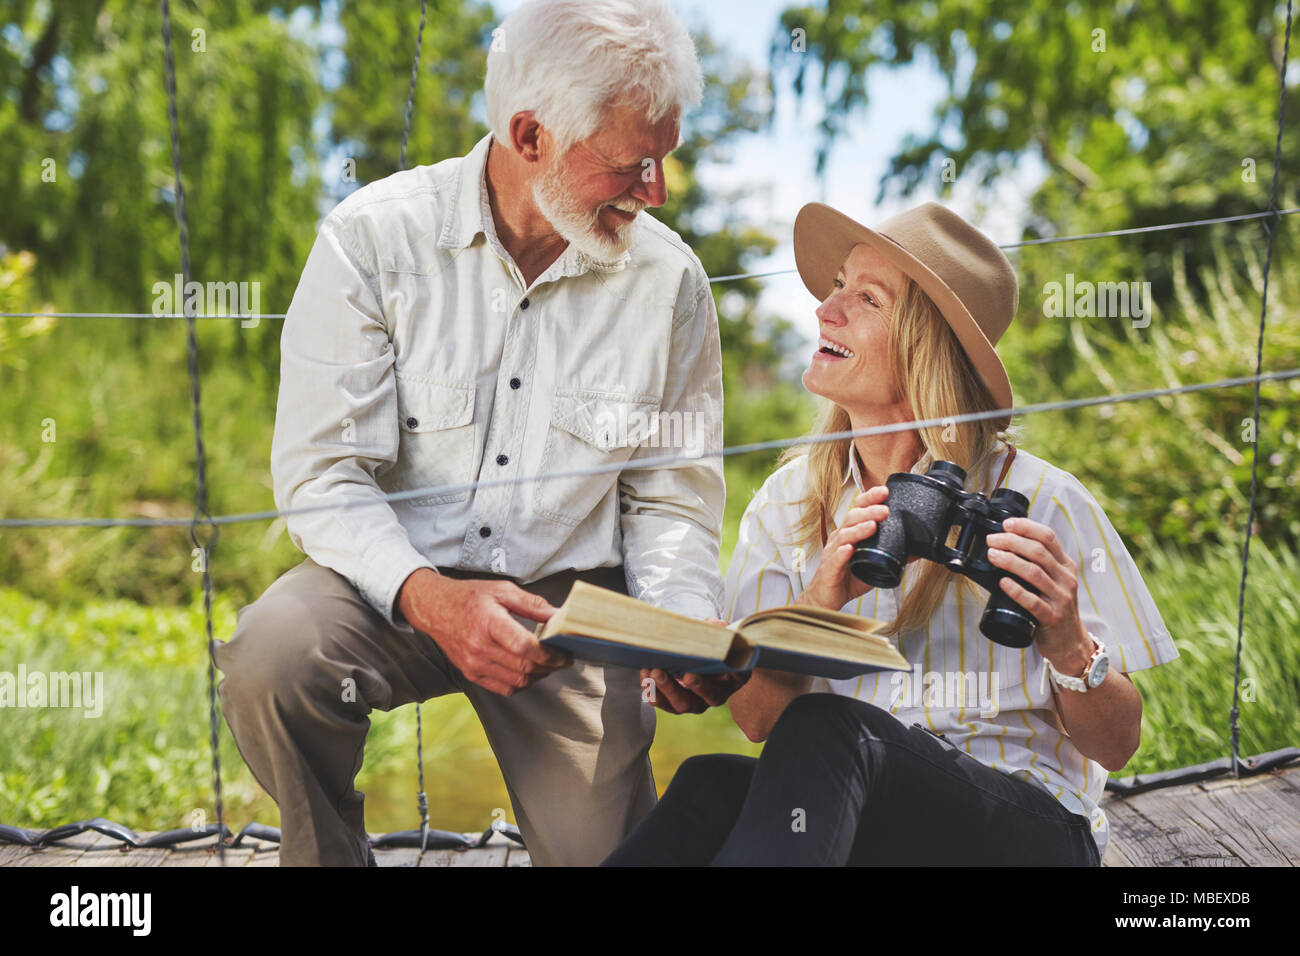 Smiling active senior couple bird watching with binoculars and book Stock Photo